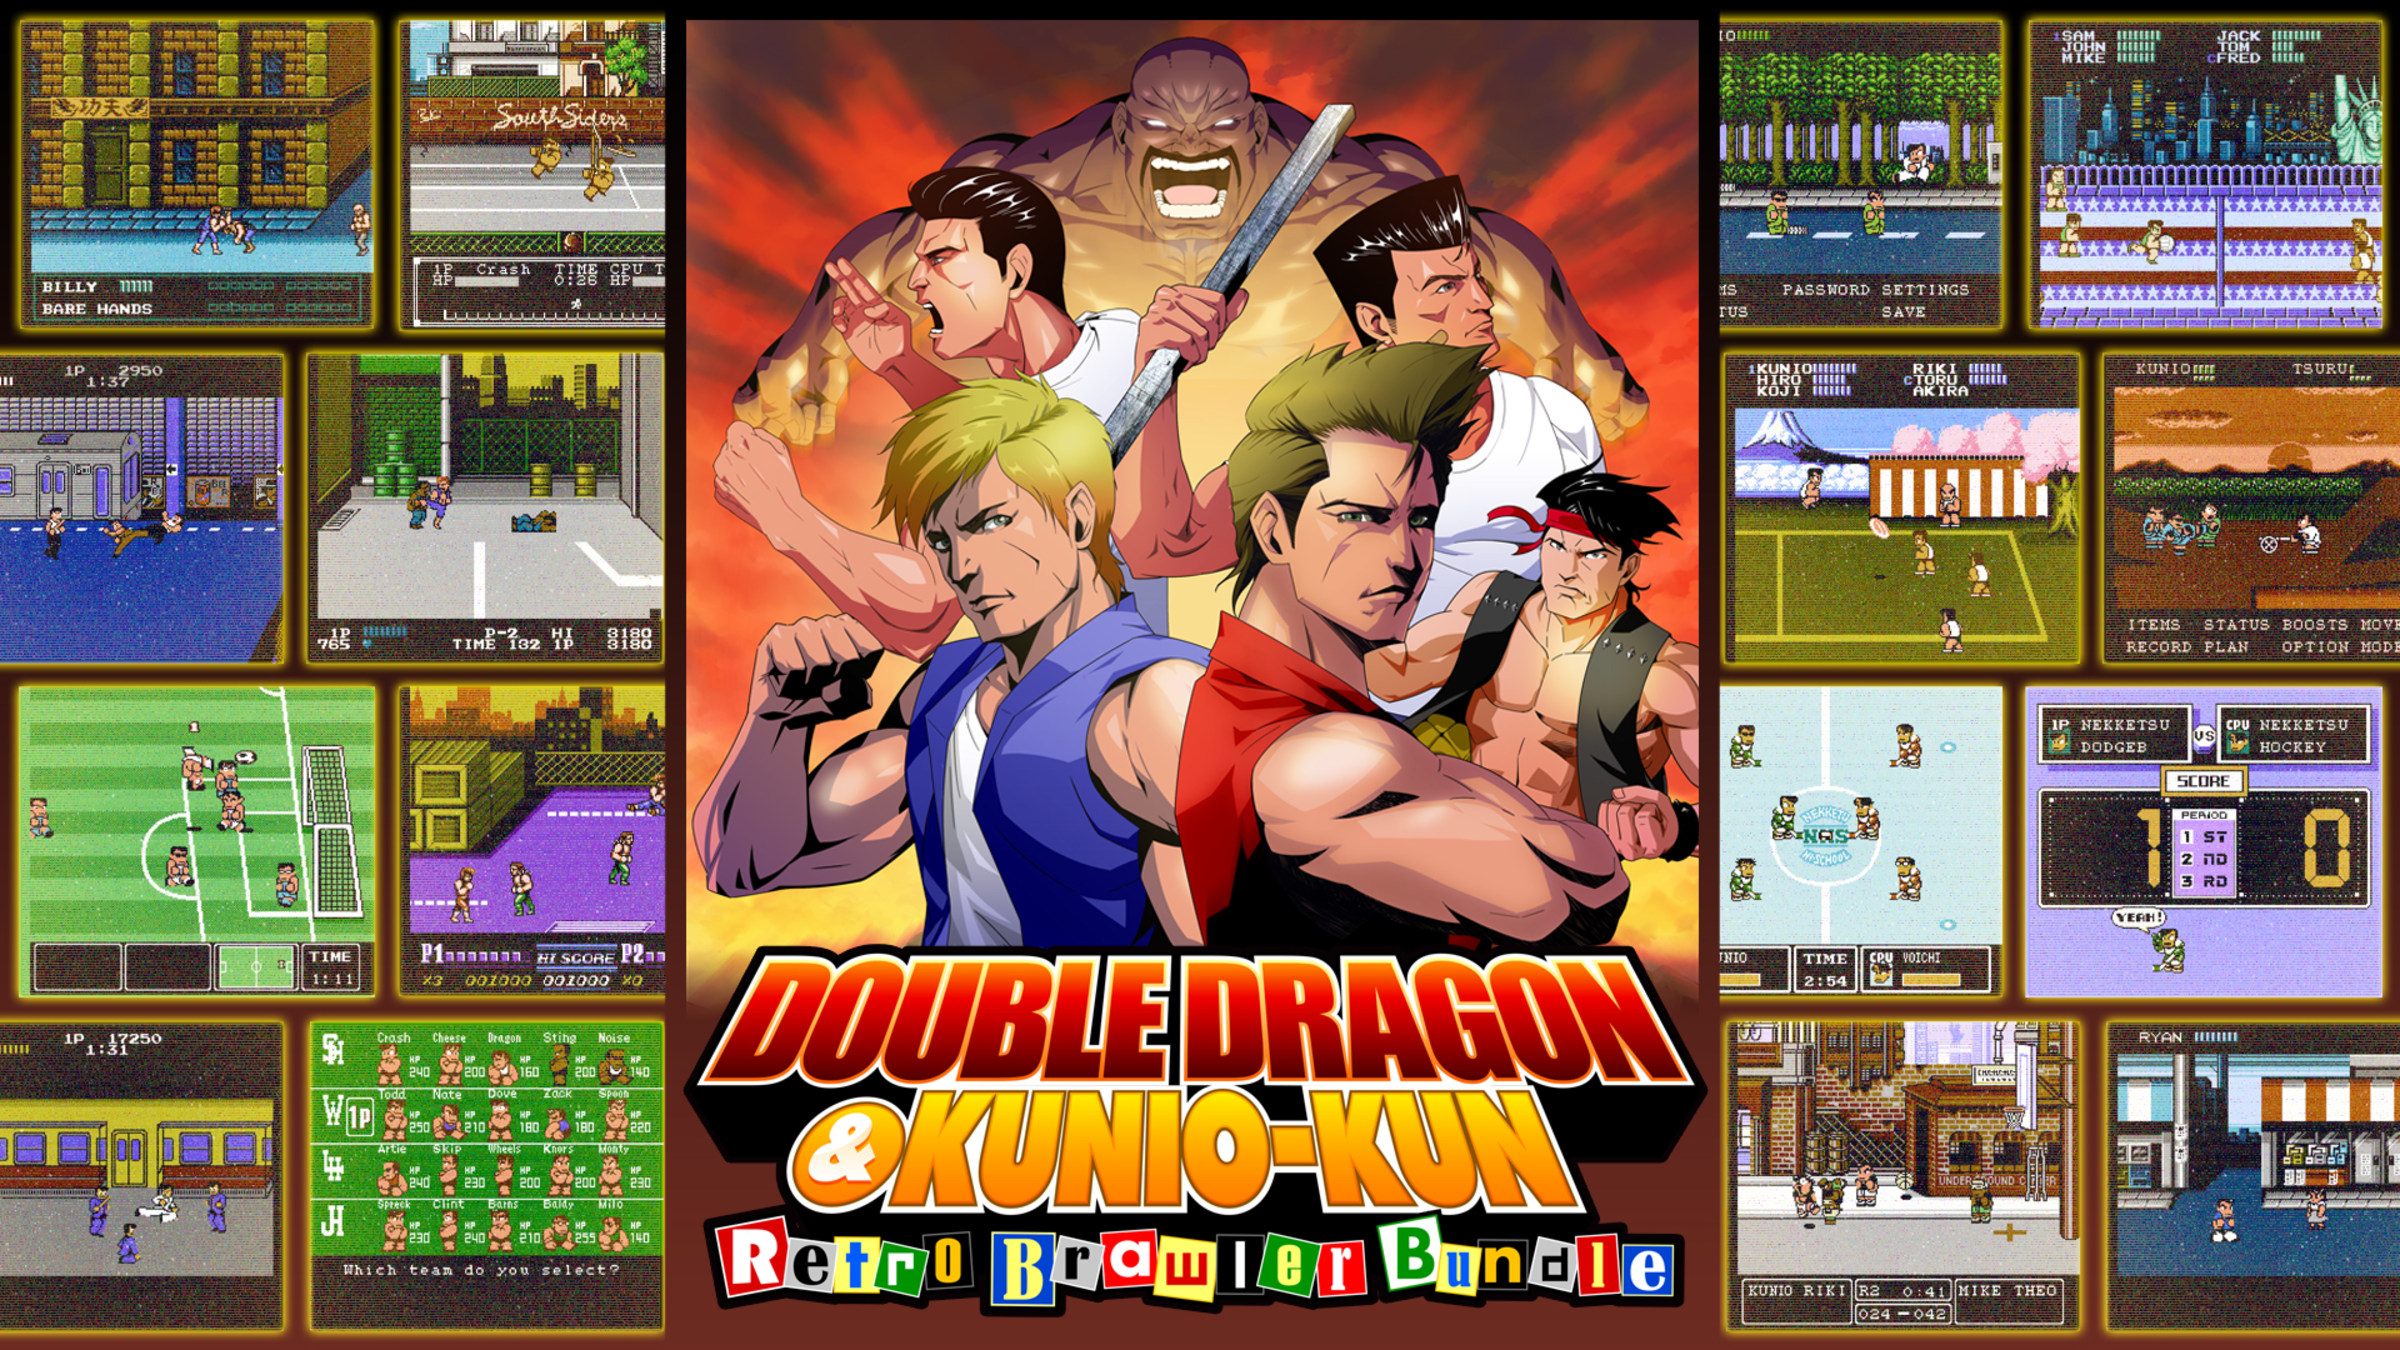 Double Dragon Collection (Multi-Language)